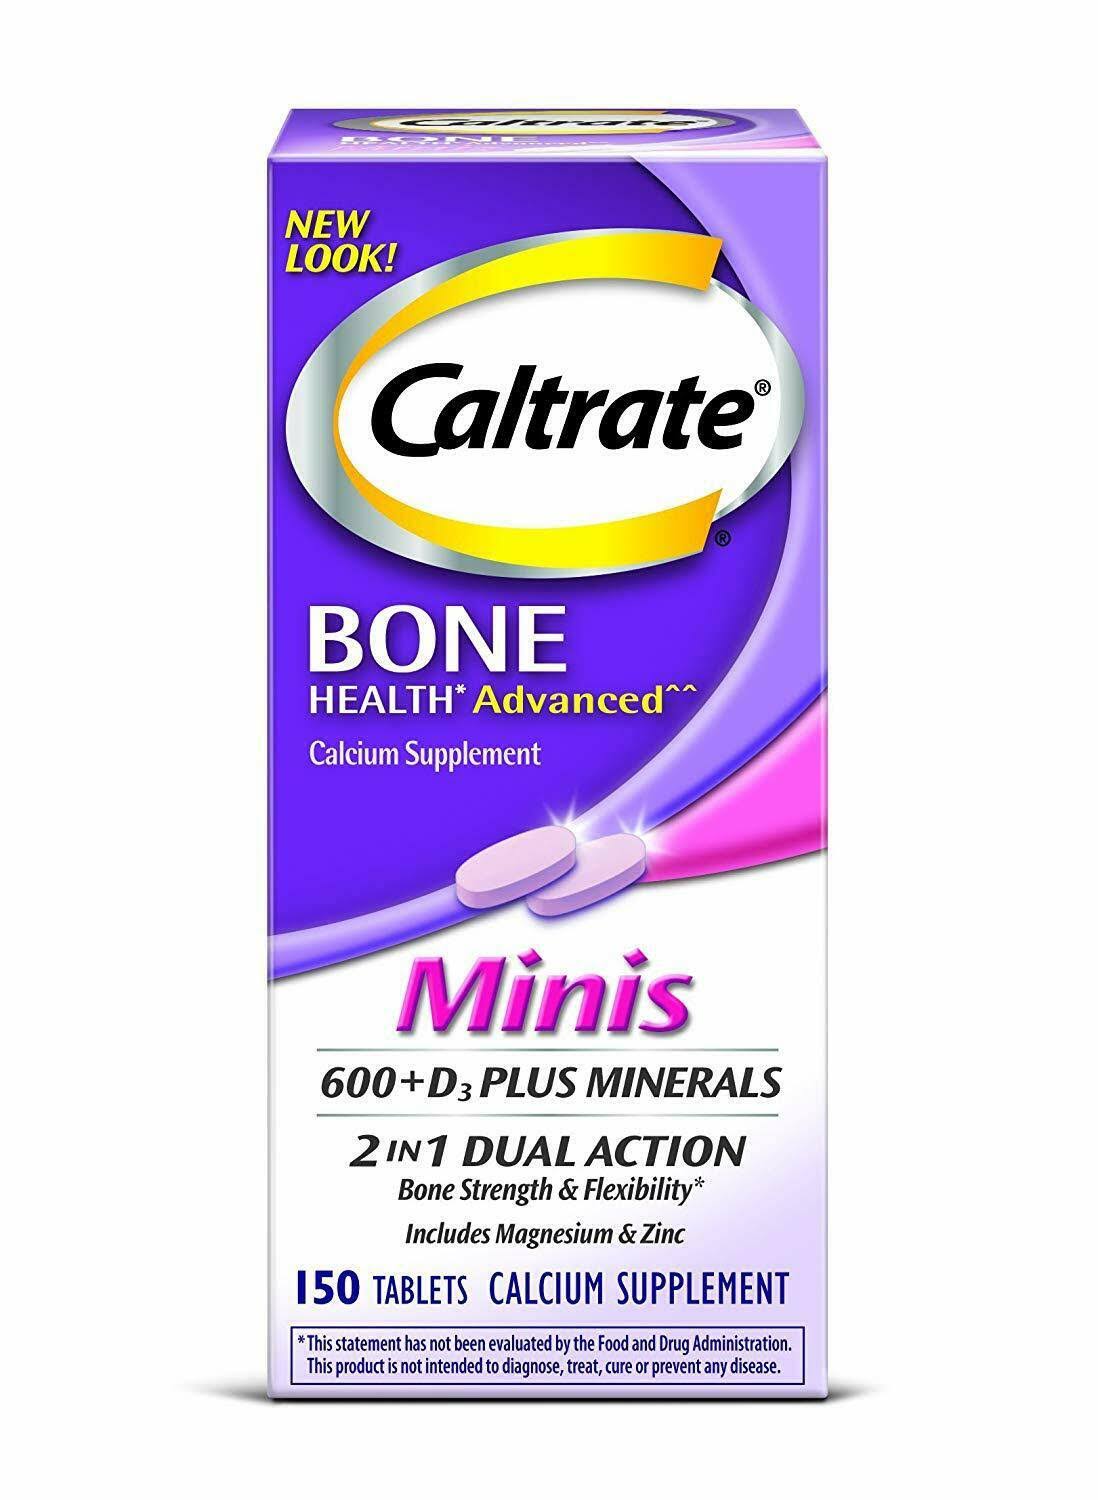 Caltrate Calcium & Vitamin D3 Supplement Plus Minerals Mini Tablets - 150 Count